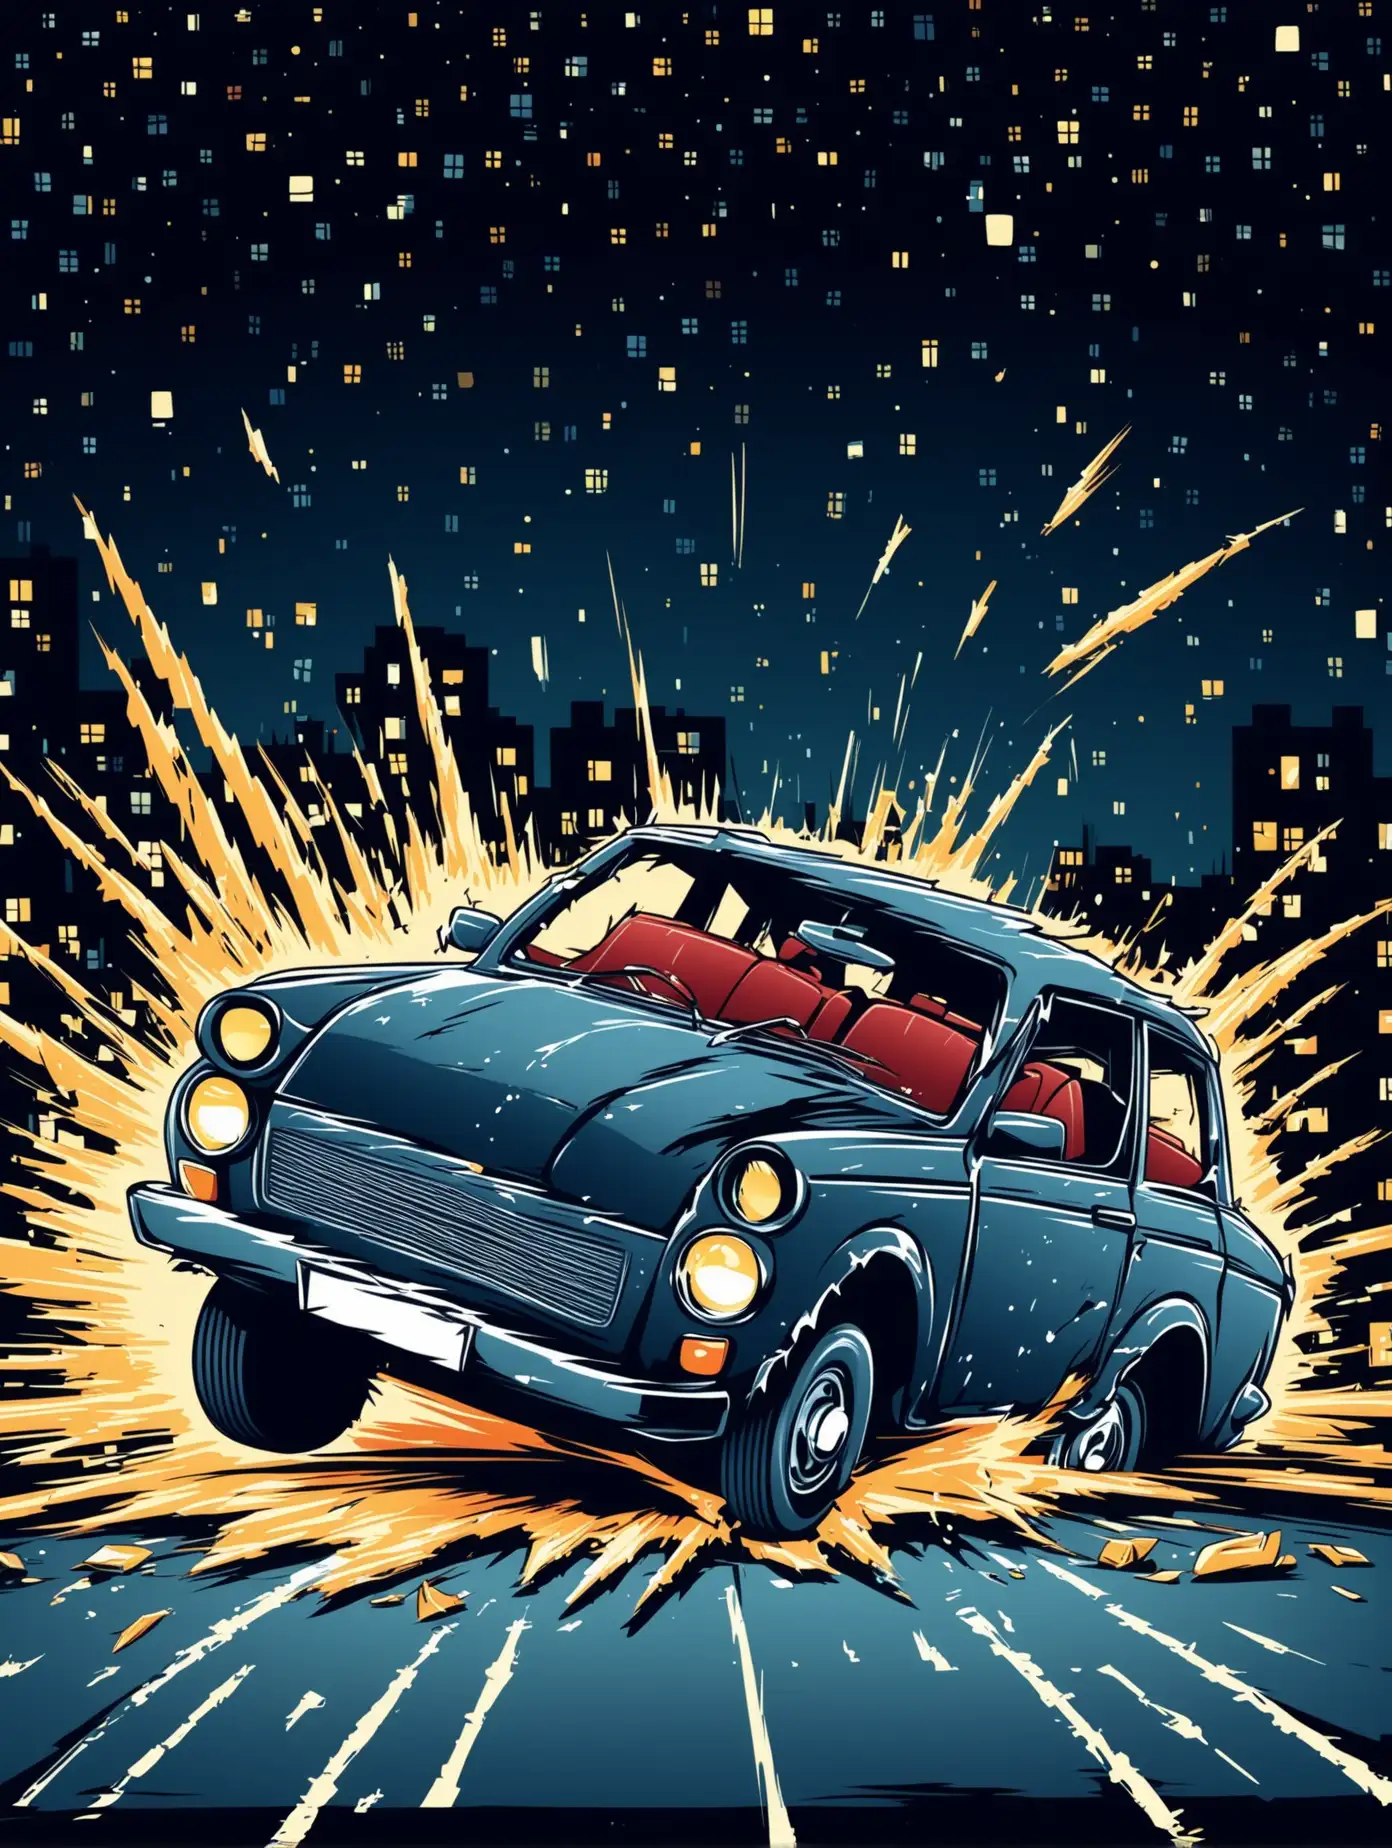 Amusing vector illustration of a car crashing at night